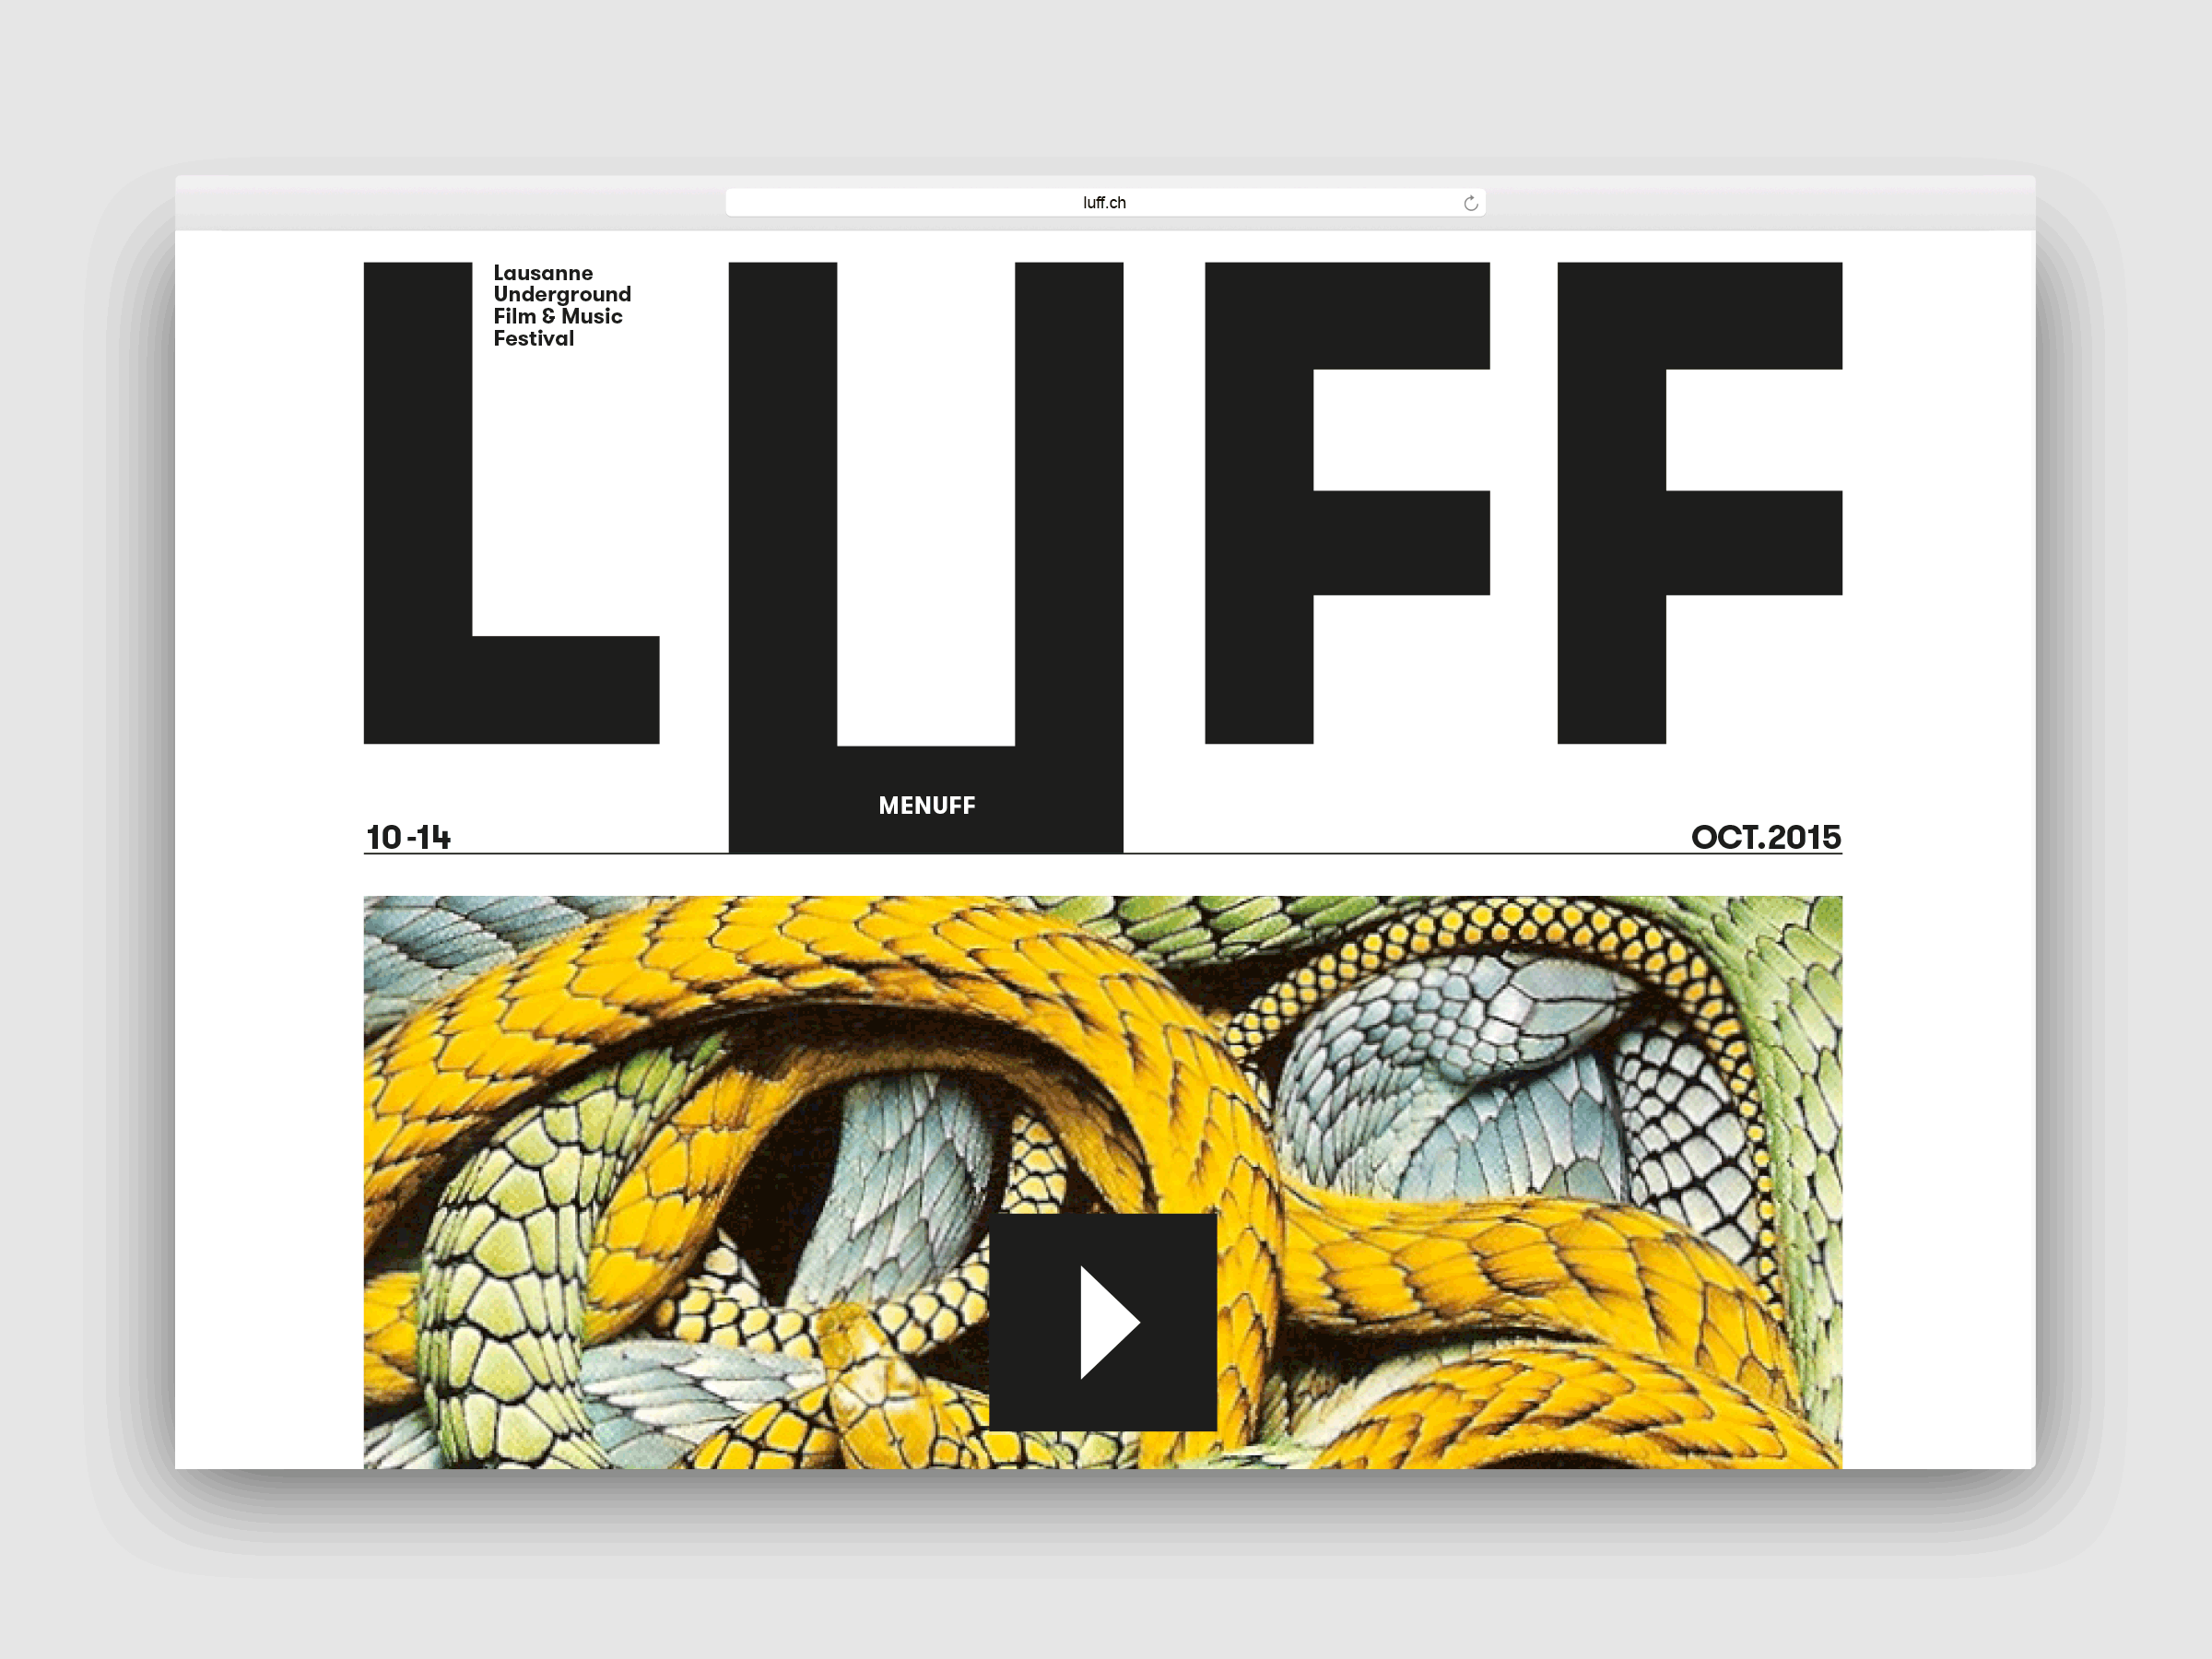 Siteweb du LUFF.